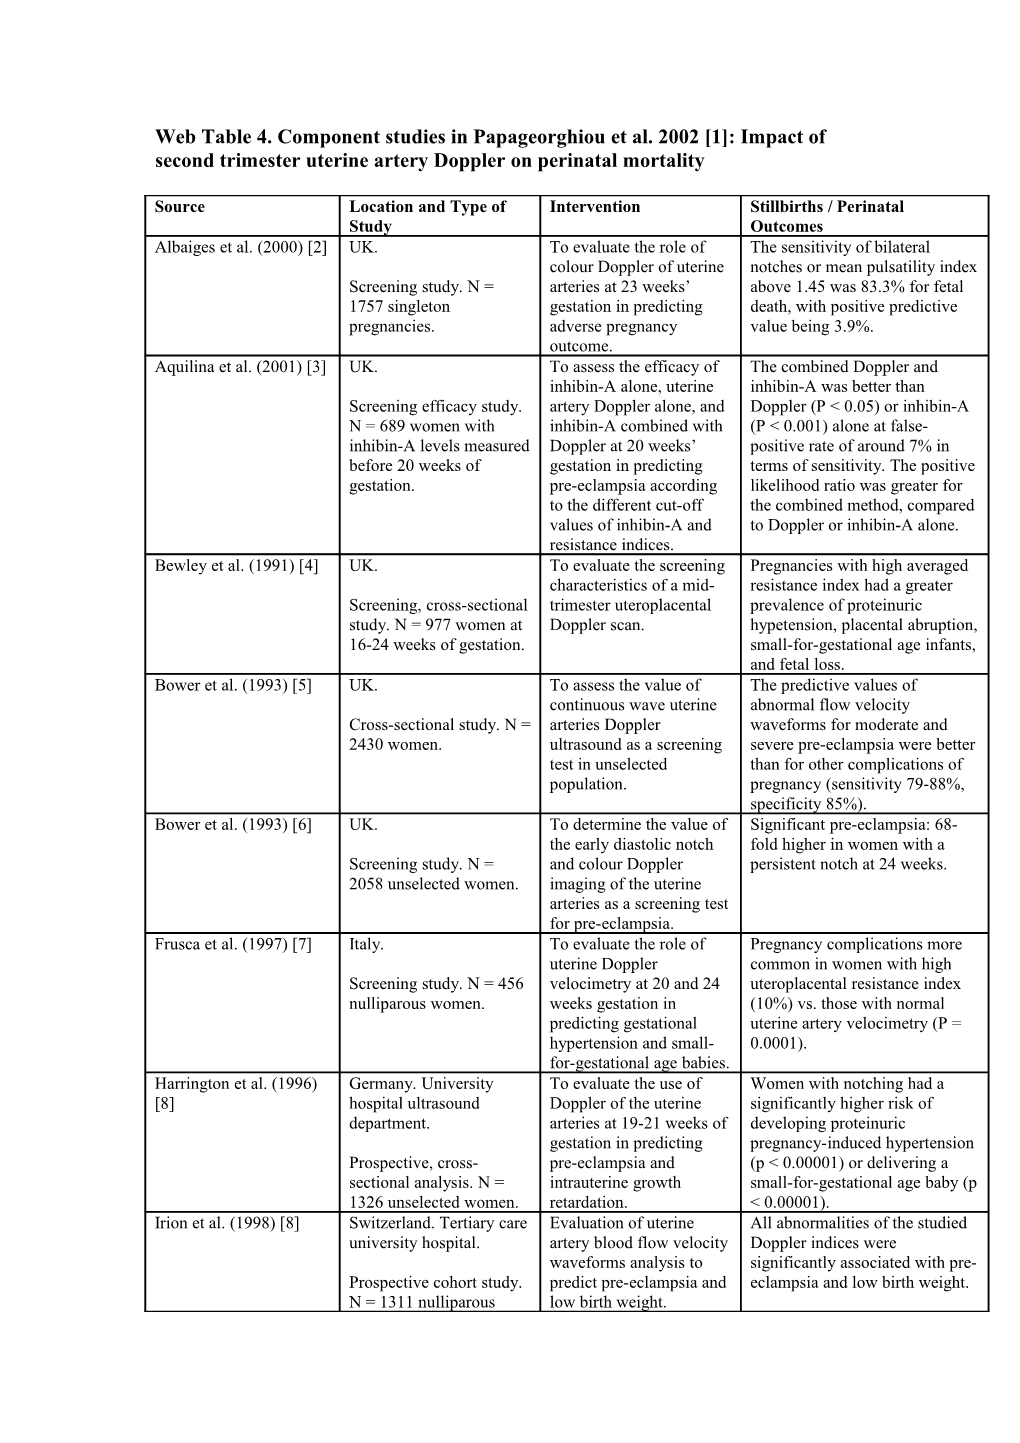 Web Table 4. Component Studies in Papageorghiou Et Al. 2002 1 : Impact of Second Trimester